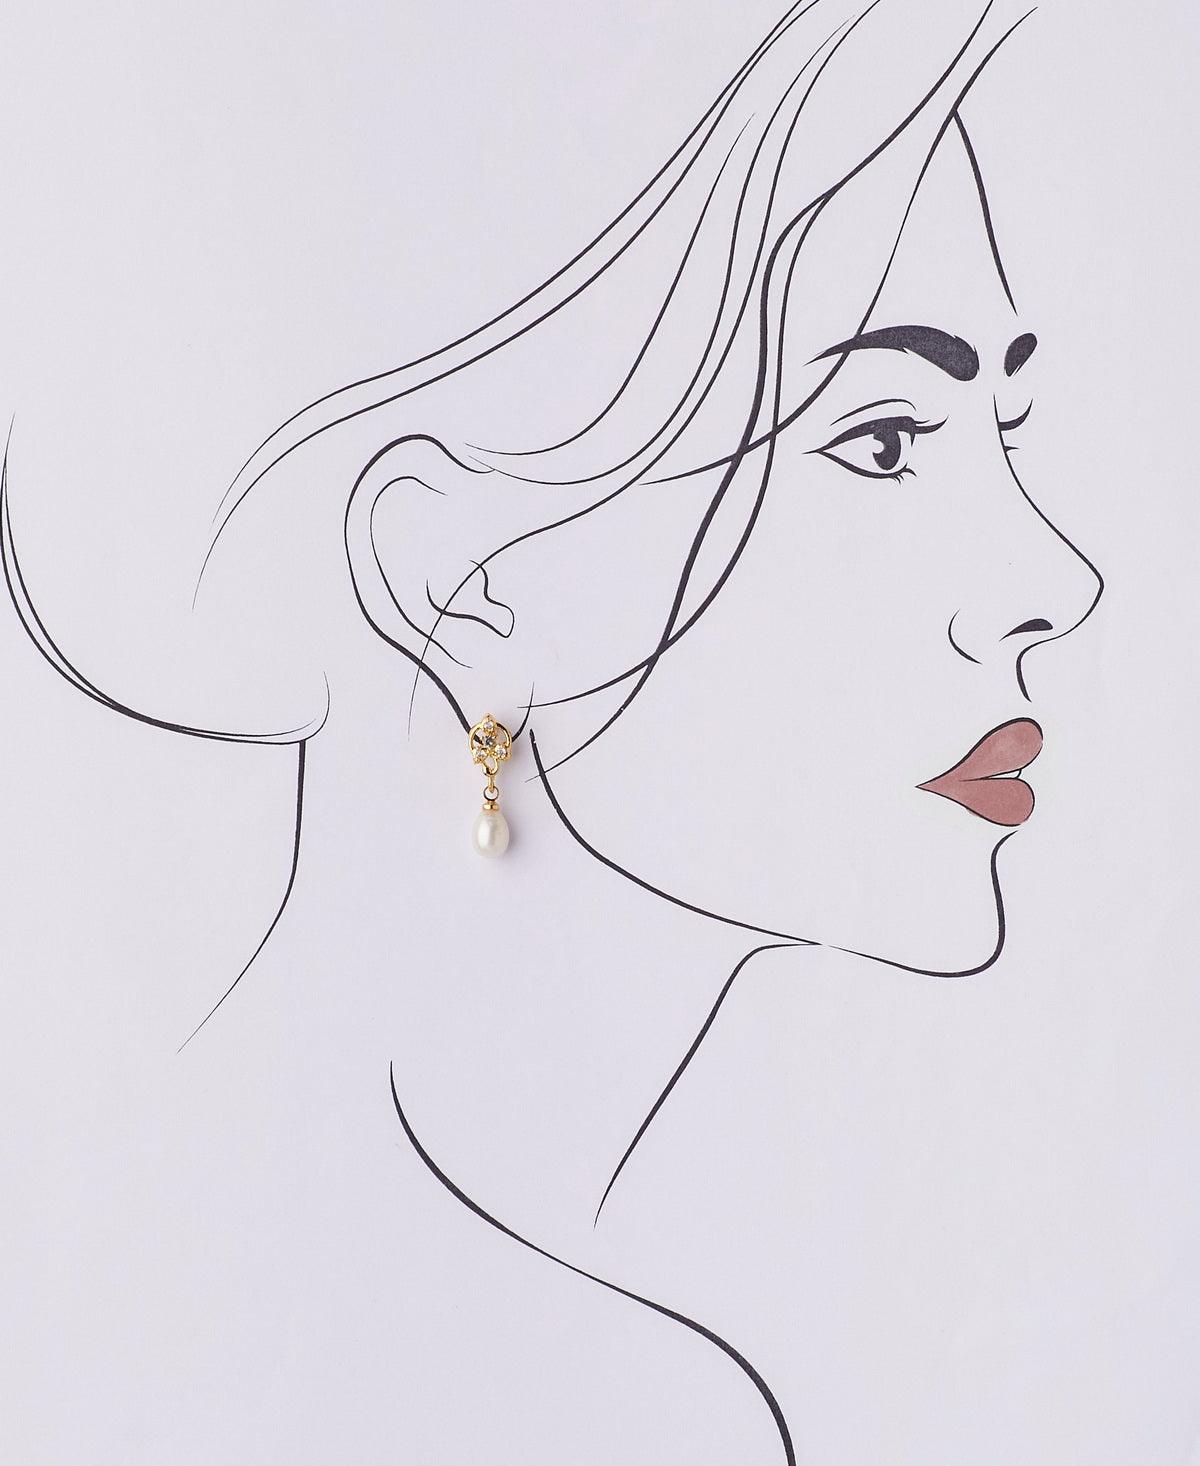 Trendy Hanging Pearl Earring - Chandrani Pearls